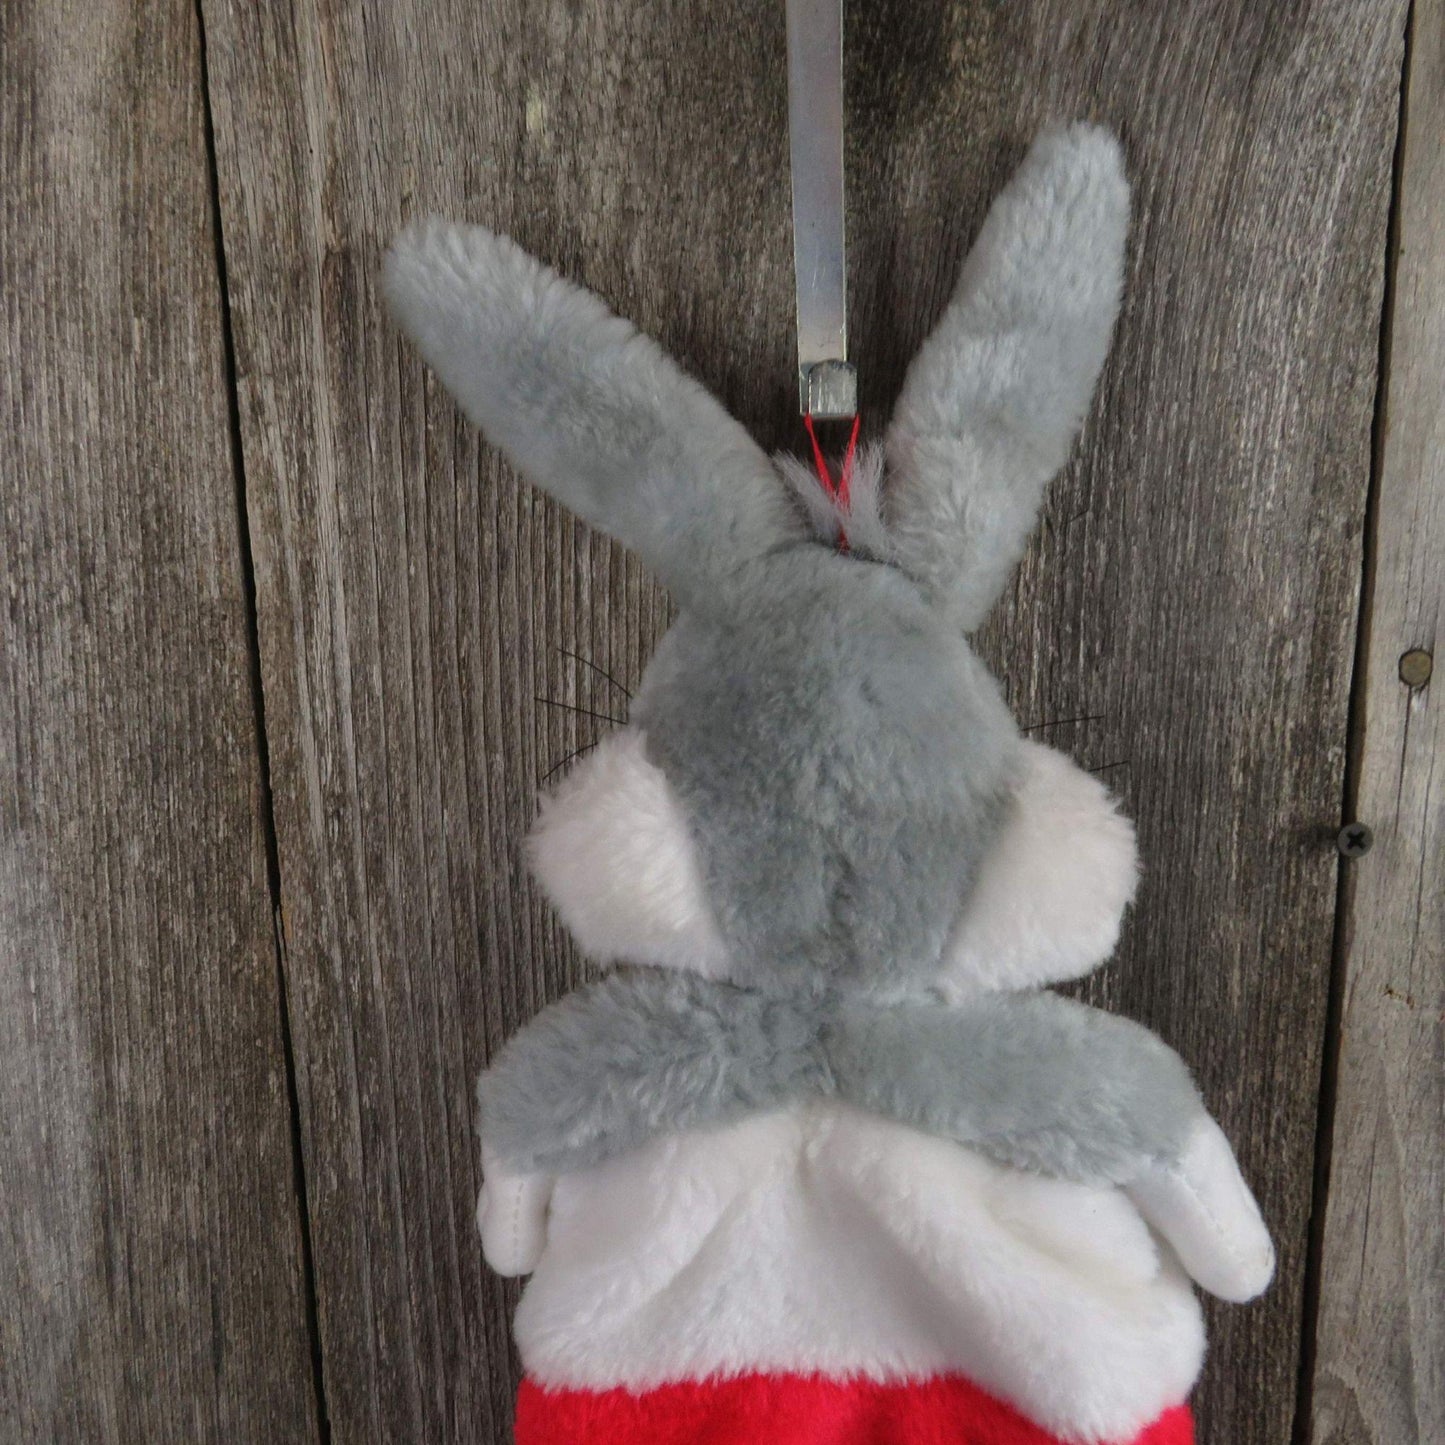 Vintage Bugs Bunny Christmas Stocking Plush Looney Tunes Bow Tie Holiday Decoration, Christmas Decoration